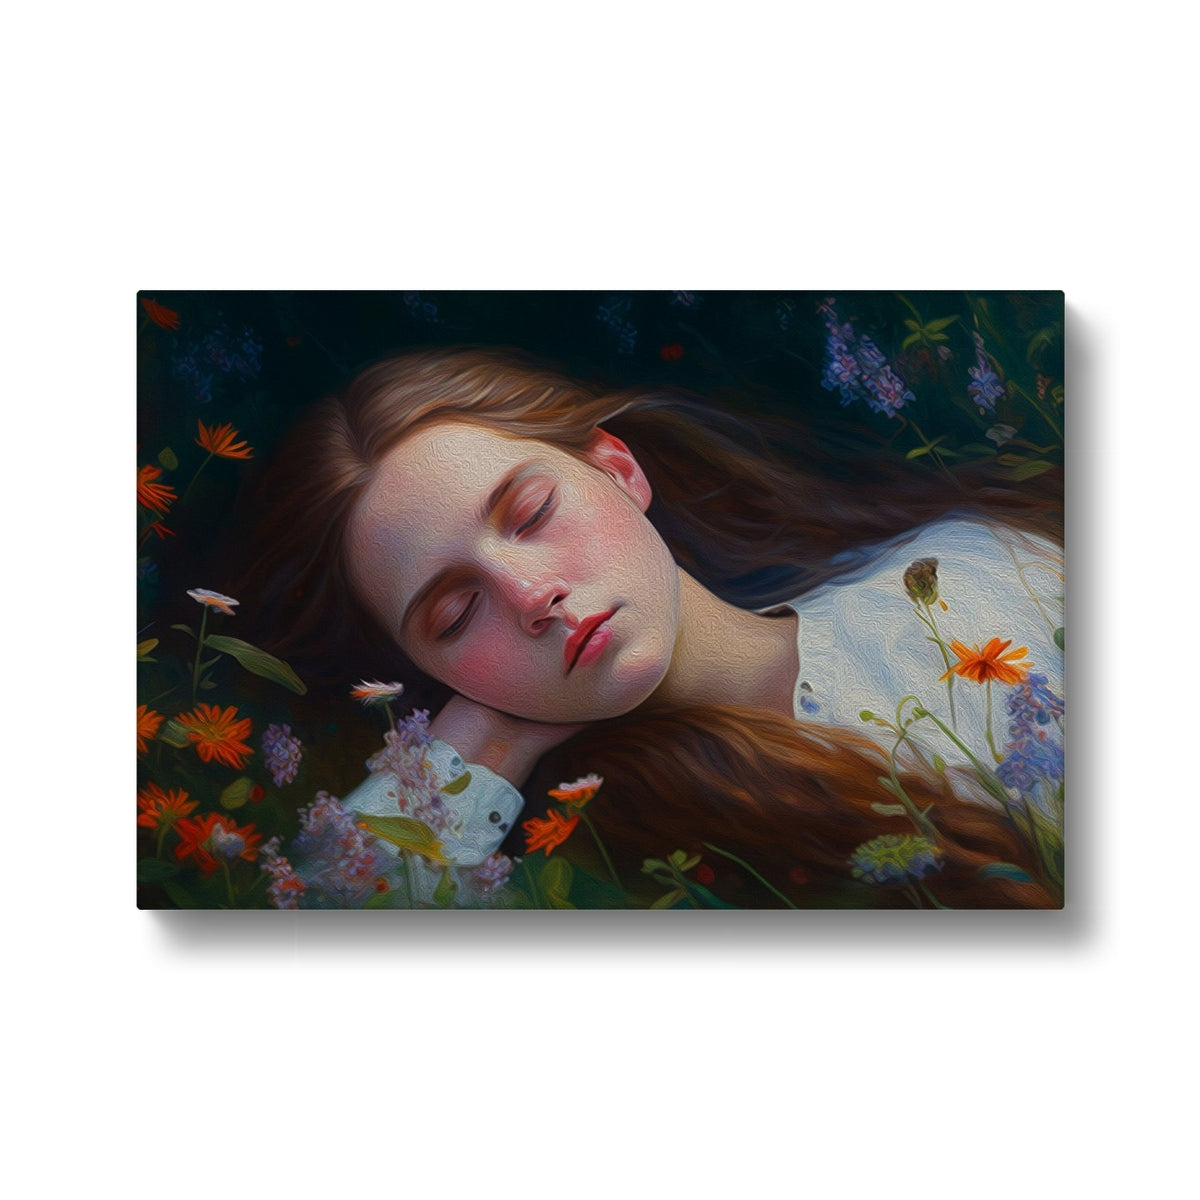 Sleeping Princess & Flowers Canvas